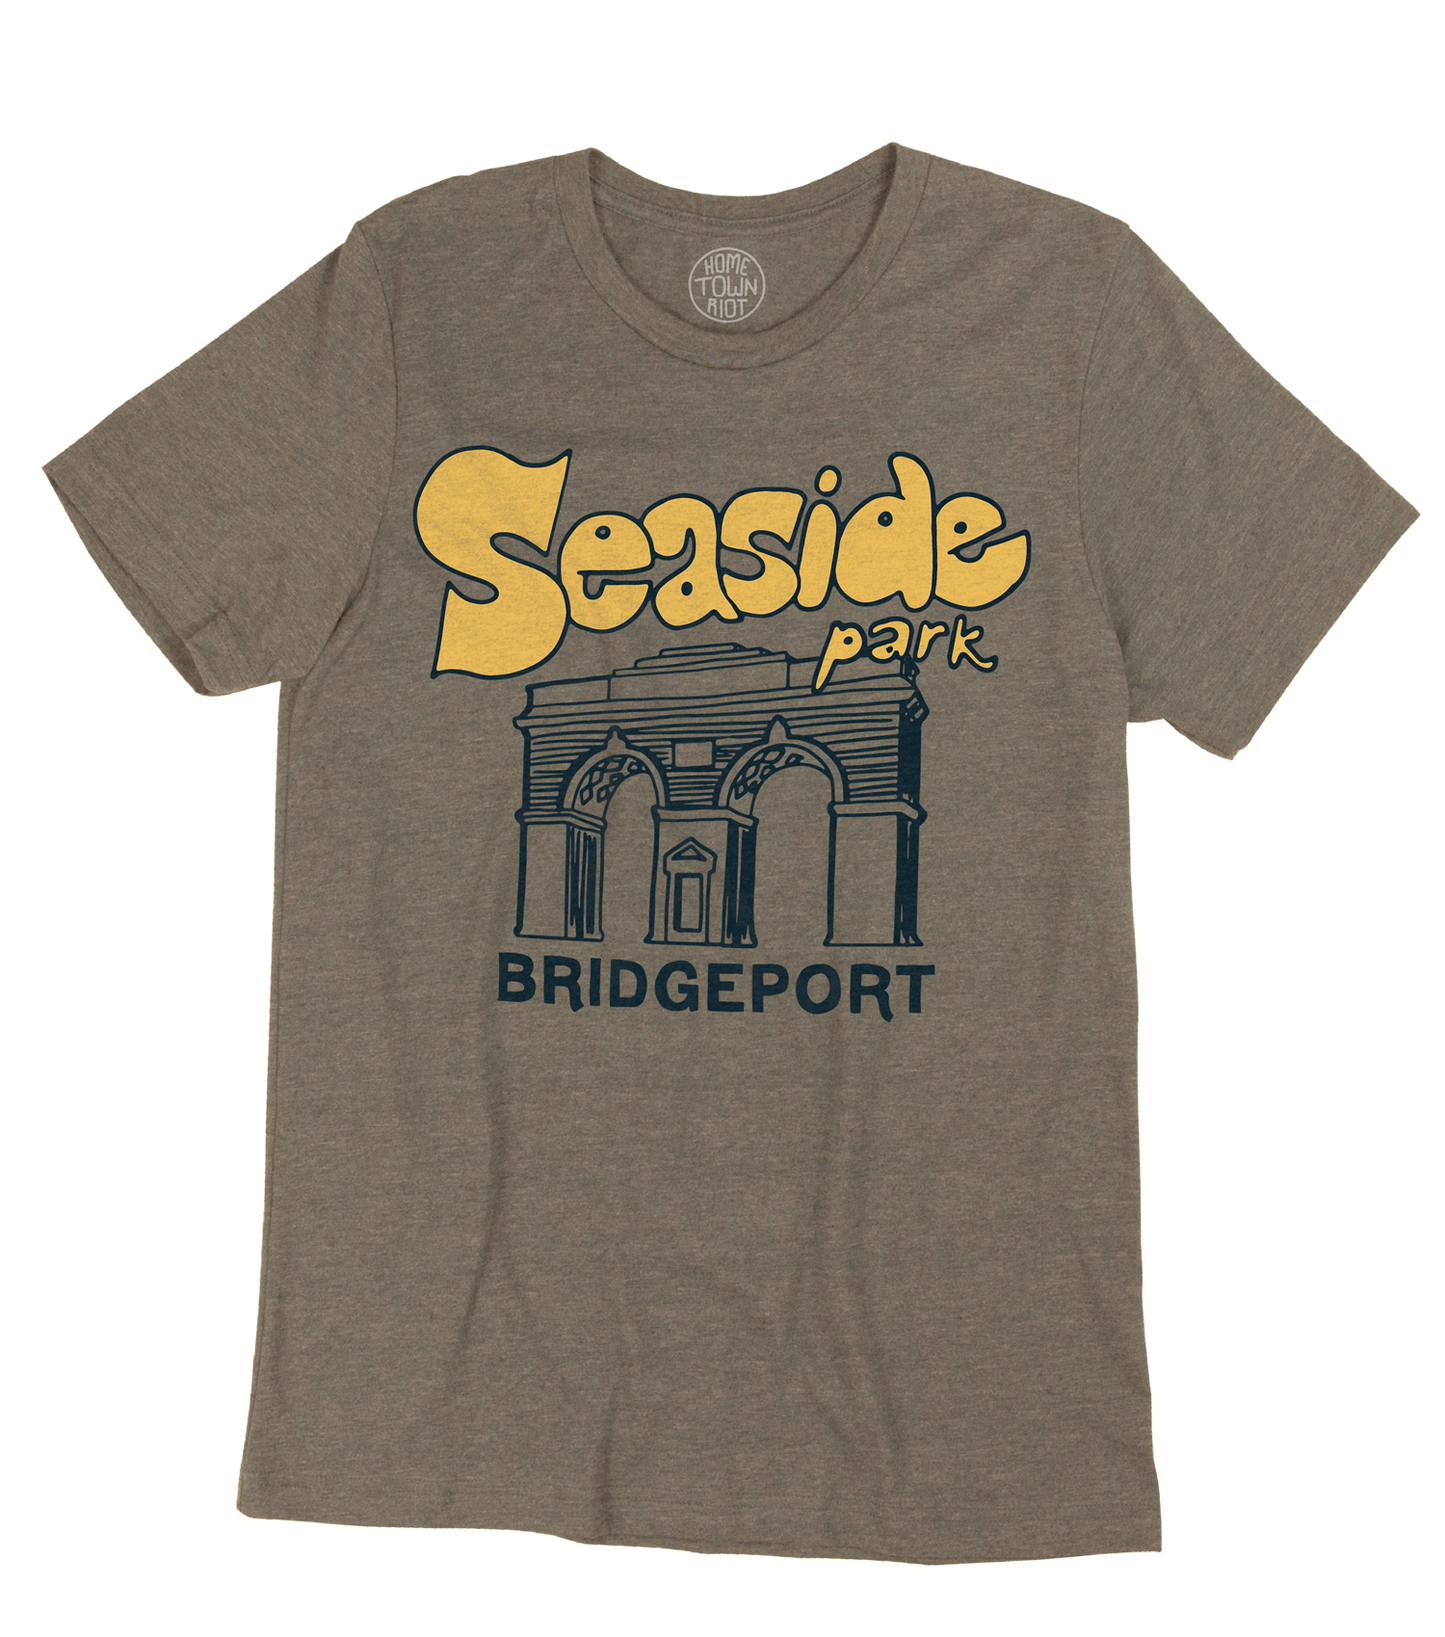 Bridgeport Seaside Park Shirt